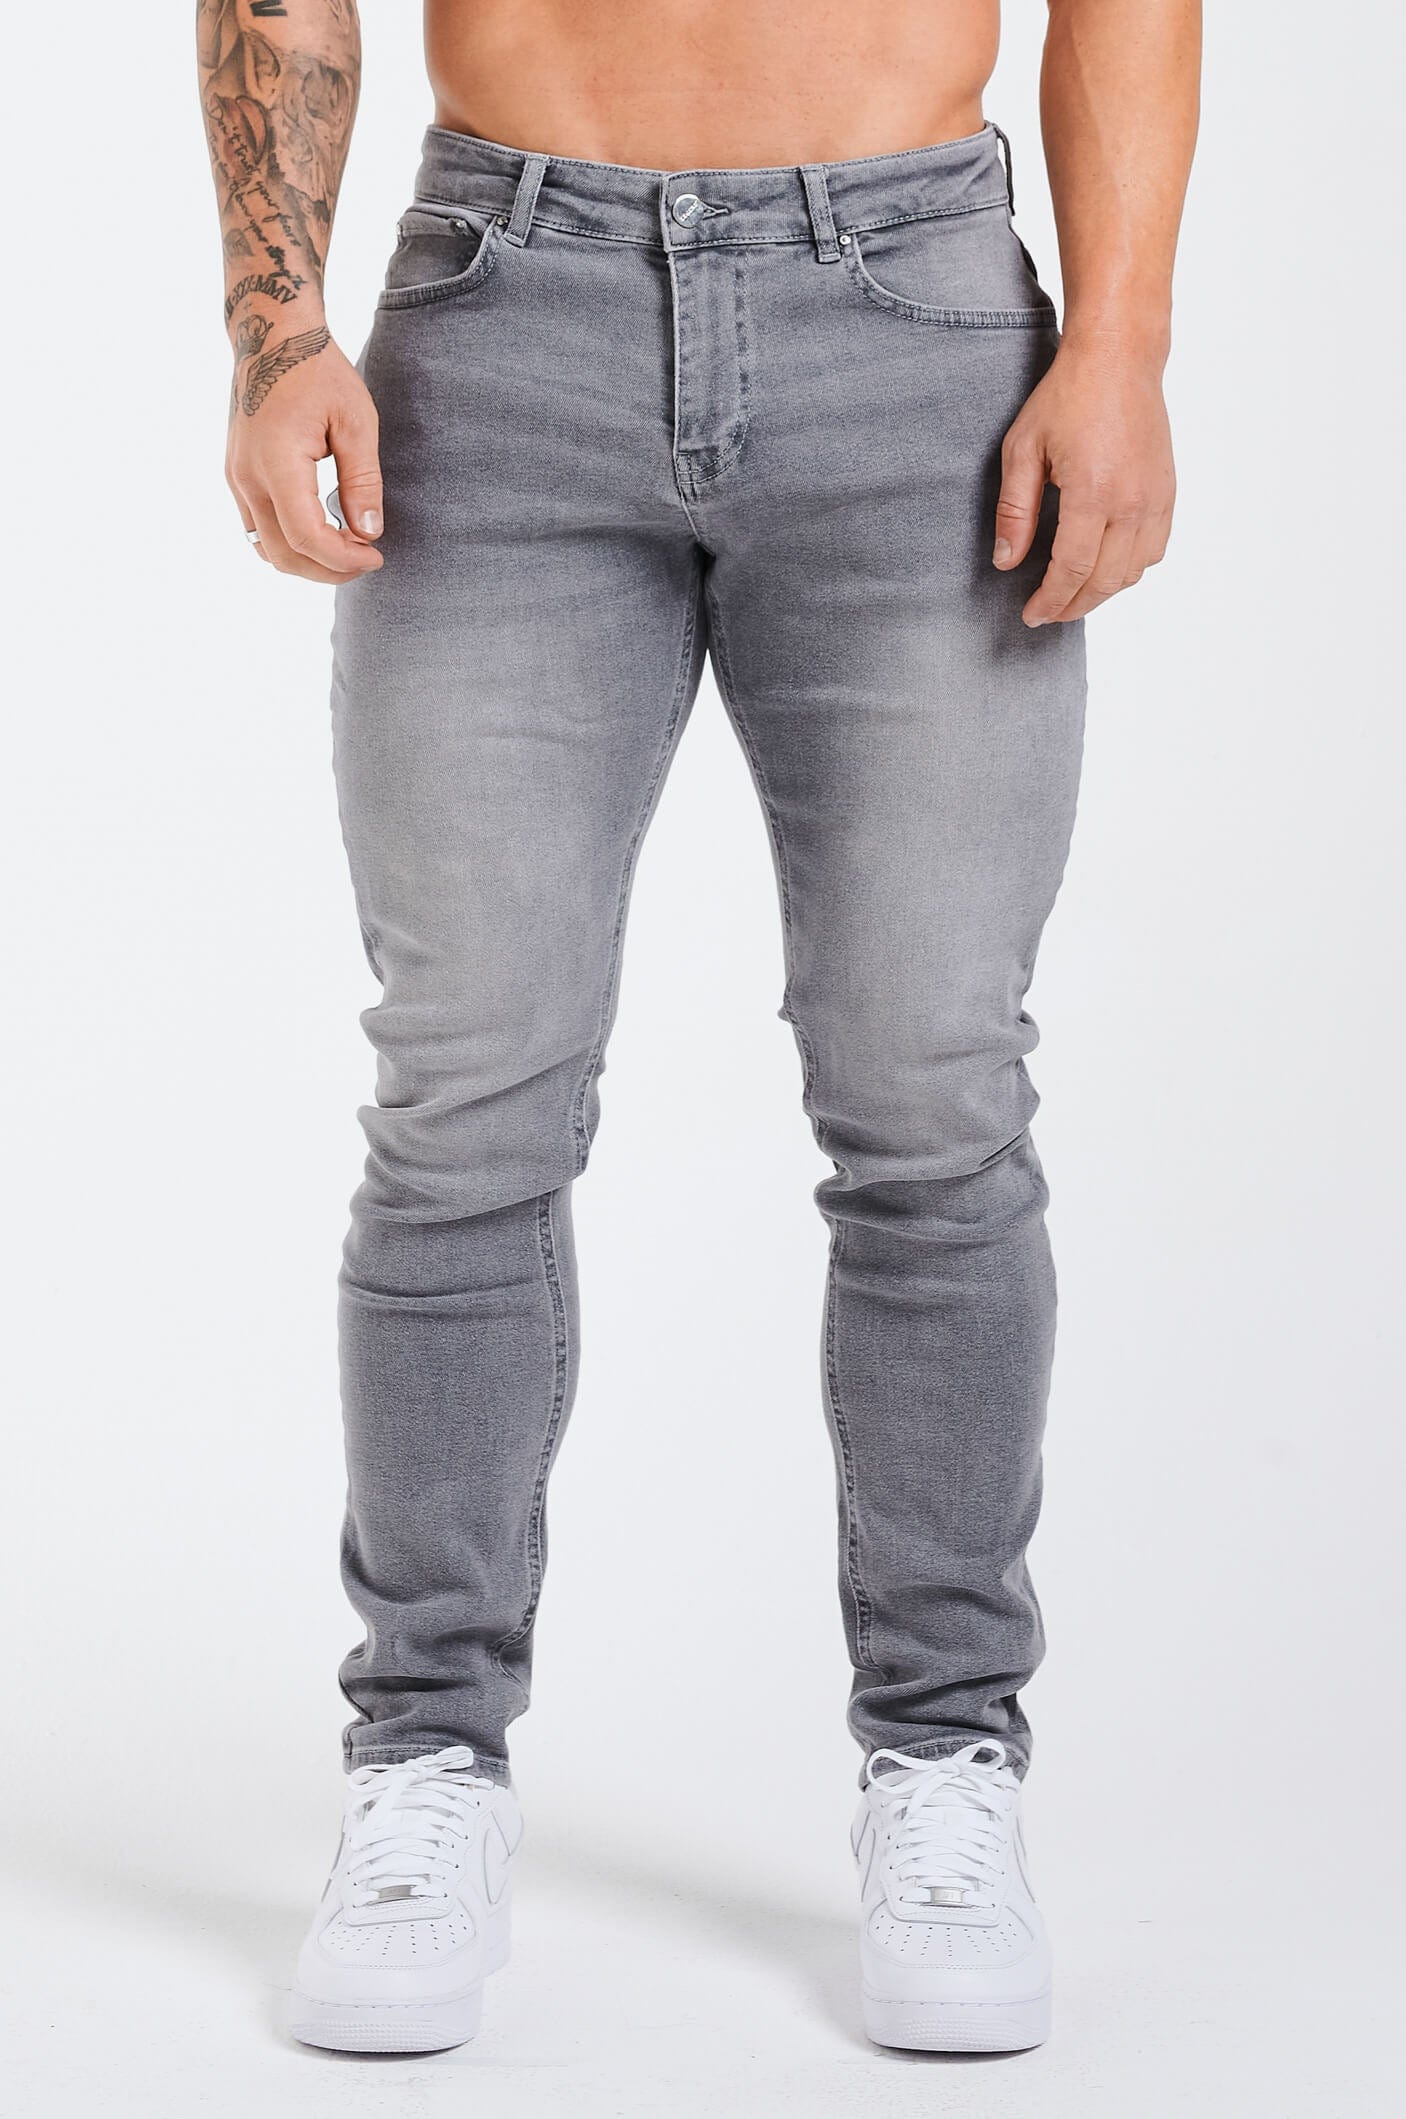 Legend London Jeans - slim 2.0 SLIM FIT JEANS 2.0 - LIGHT GREY WASH